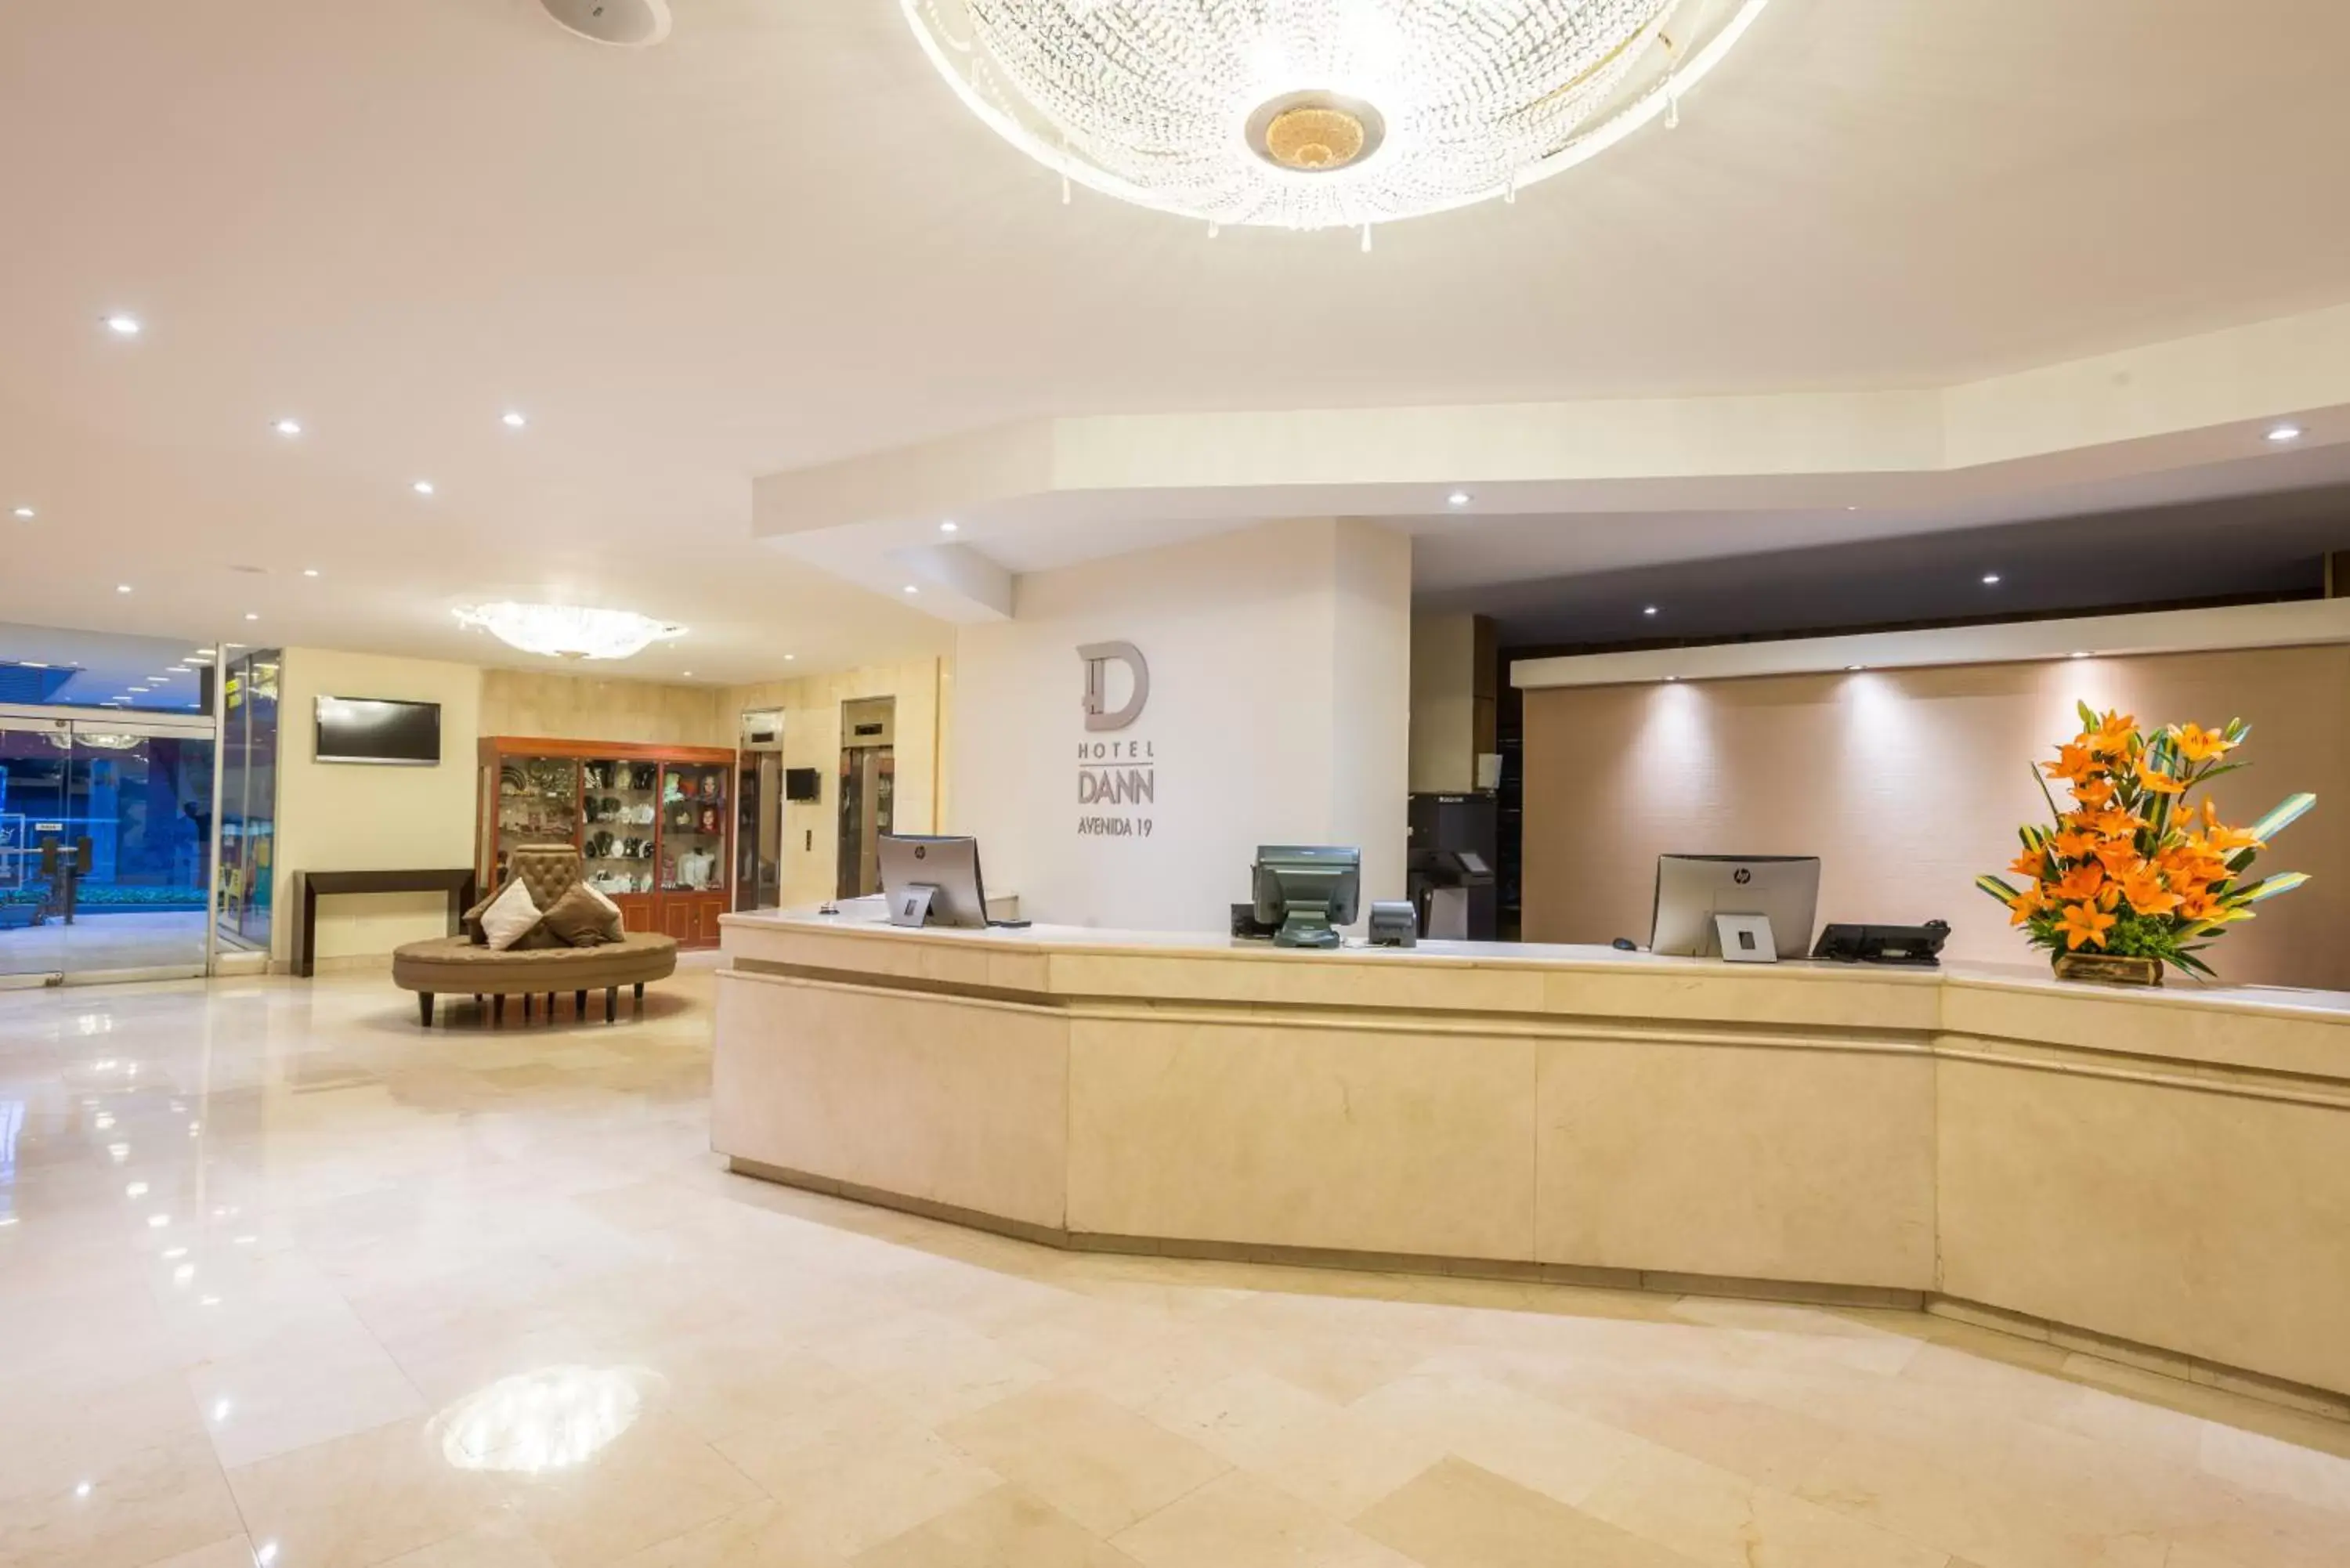 Area and facilities, Lobby/Reception in Hotel Dann Av. 19